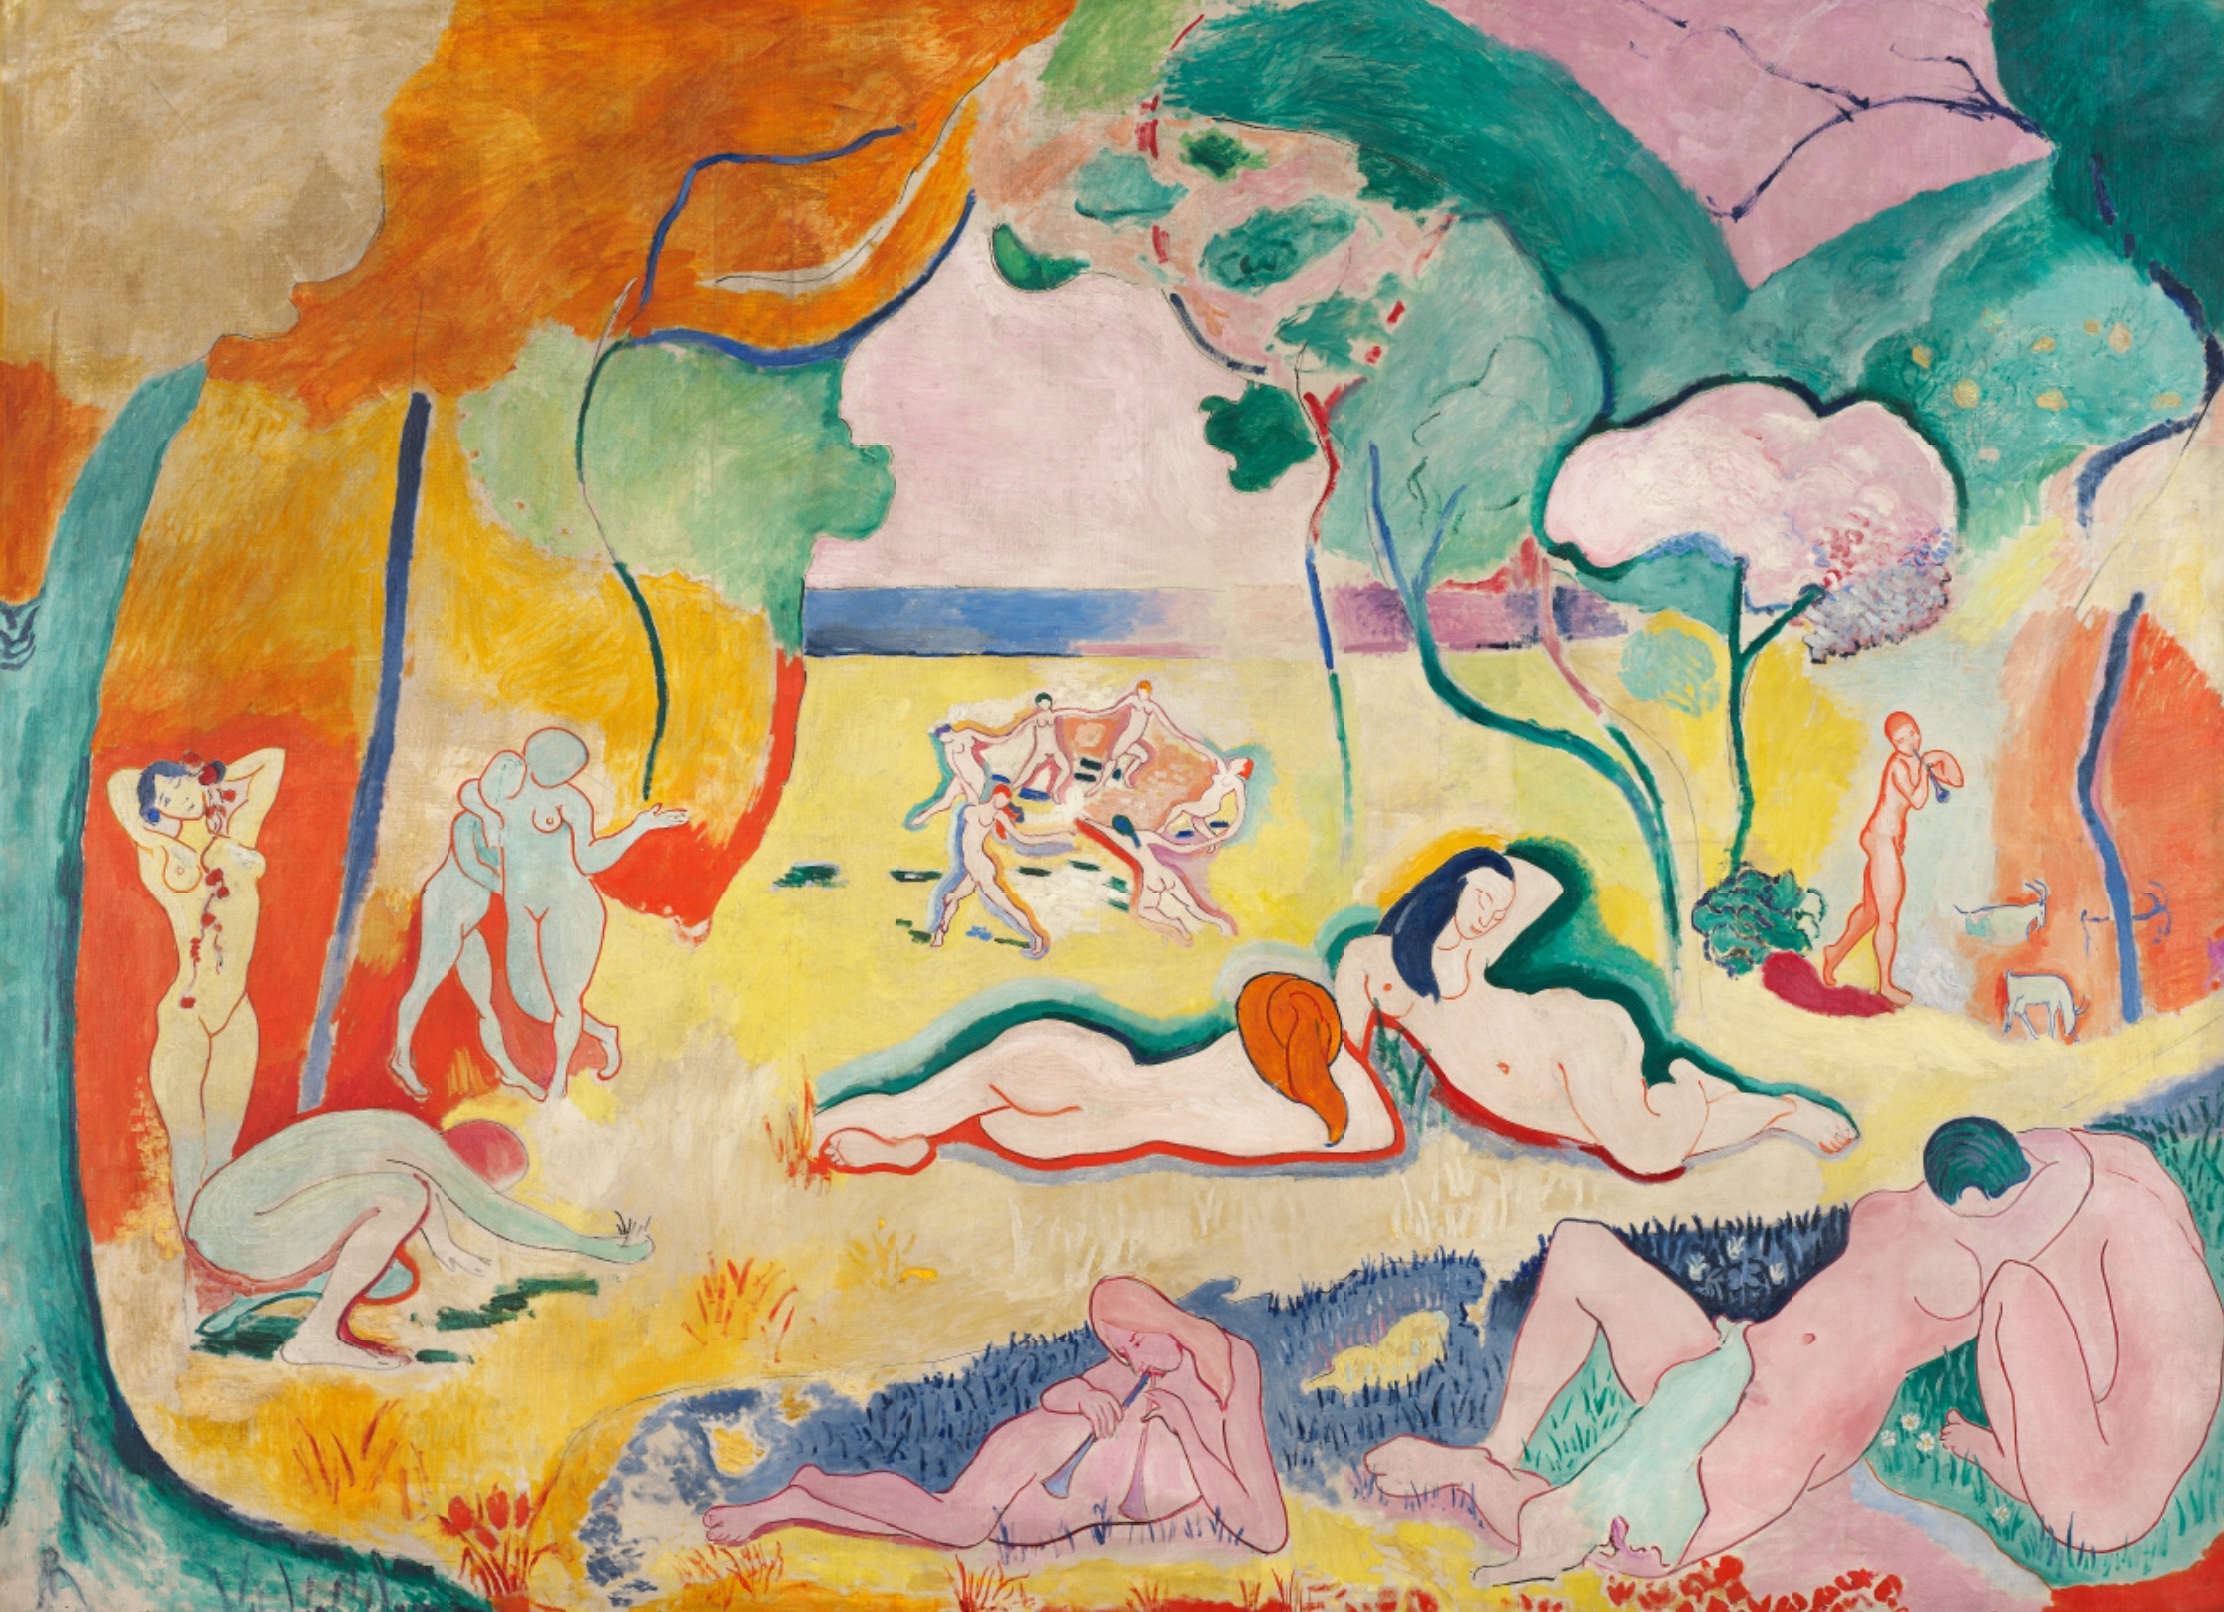 Henri Matisse, Bonheur de Vivre (Joy of Life), 1905-06, oil on canvas, 176.5 x 240.7 cm (Barnes Foundation, Philadelphia)